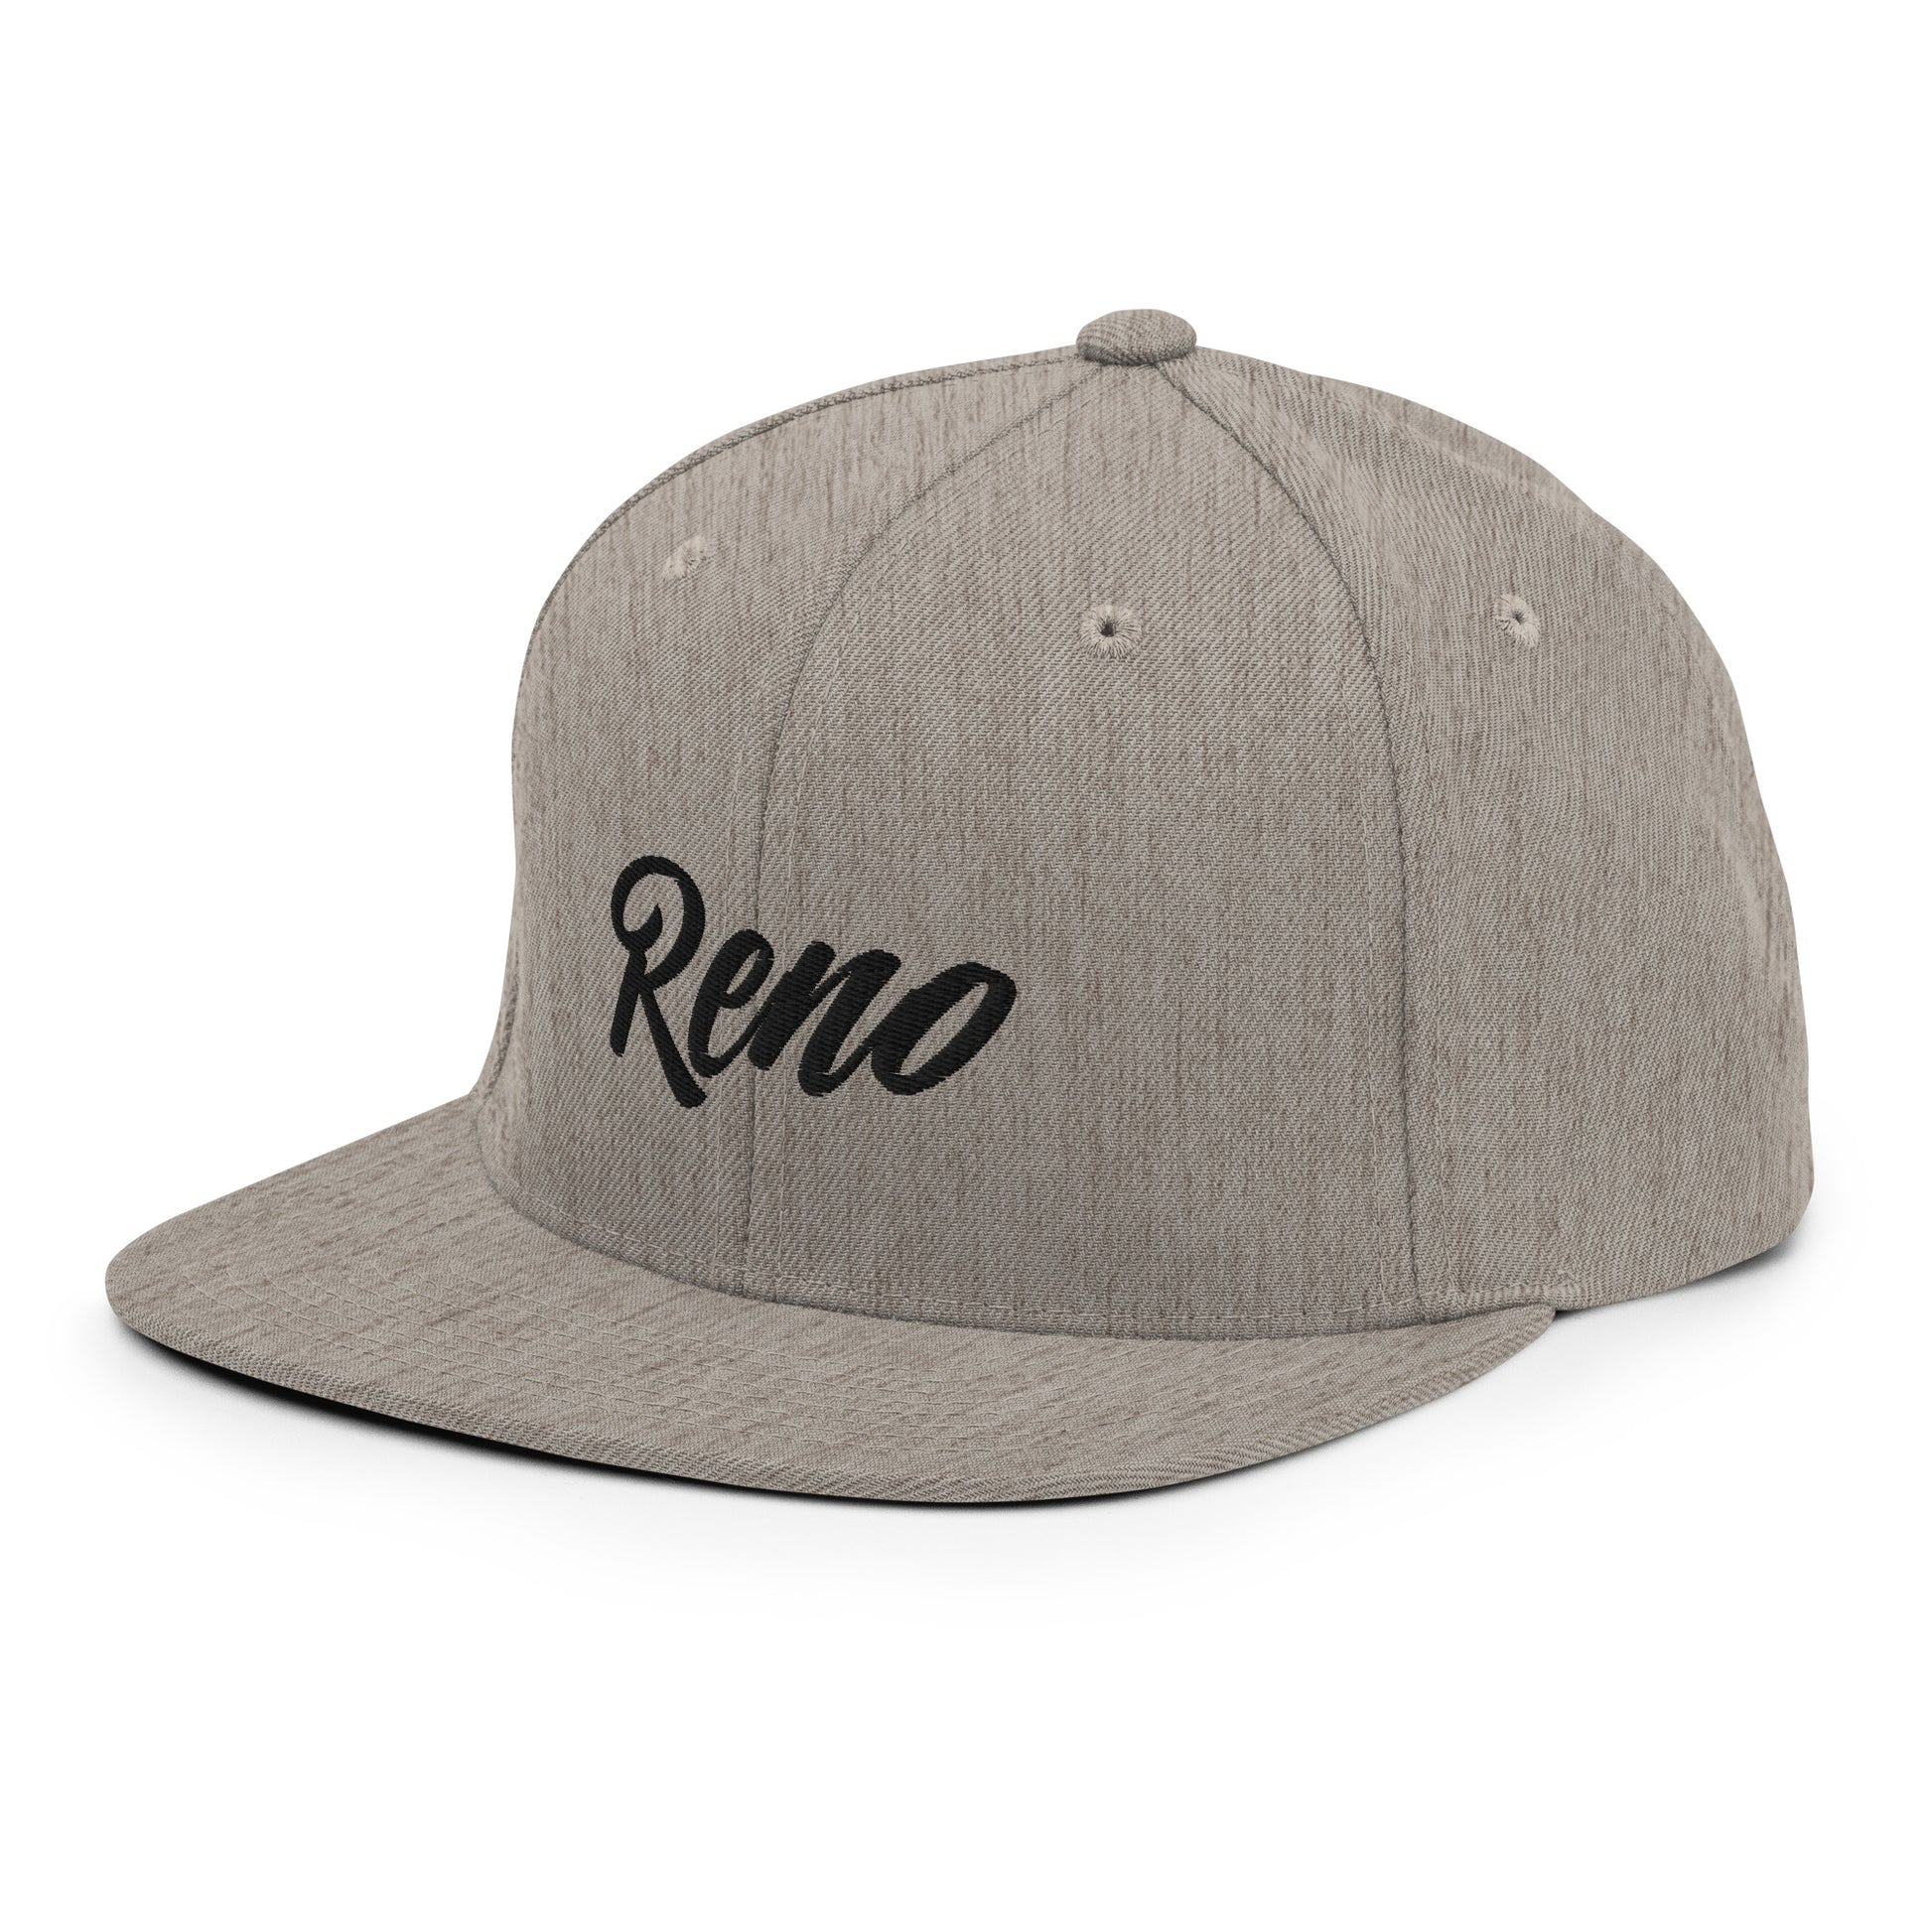 Reno Snapback Hat 13